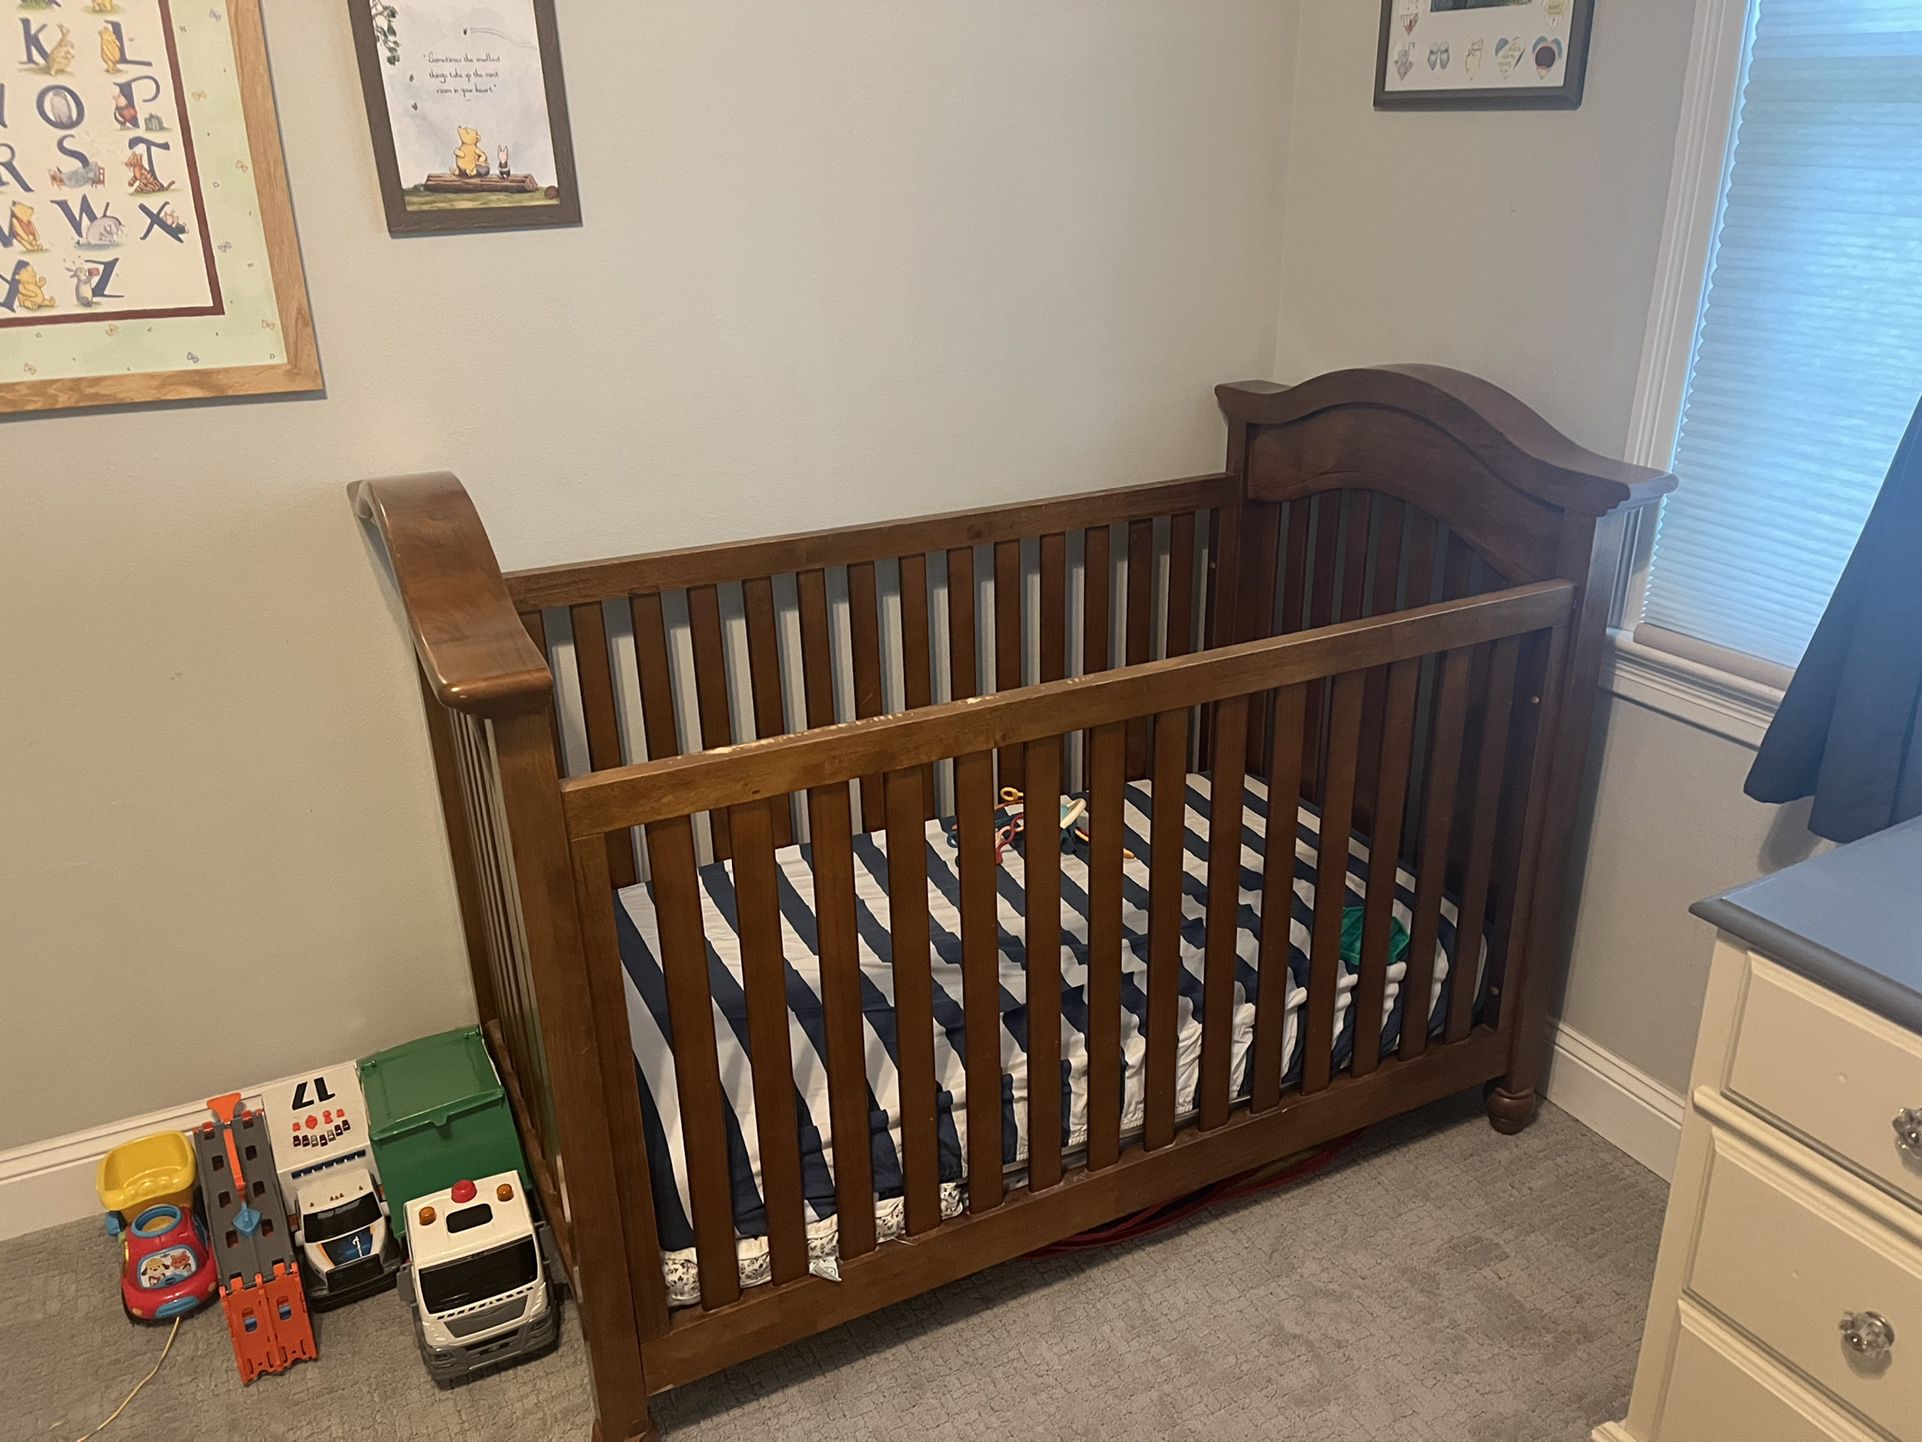 Solid Wood Baby Crib